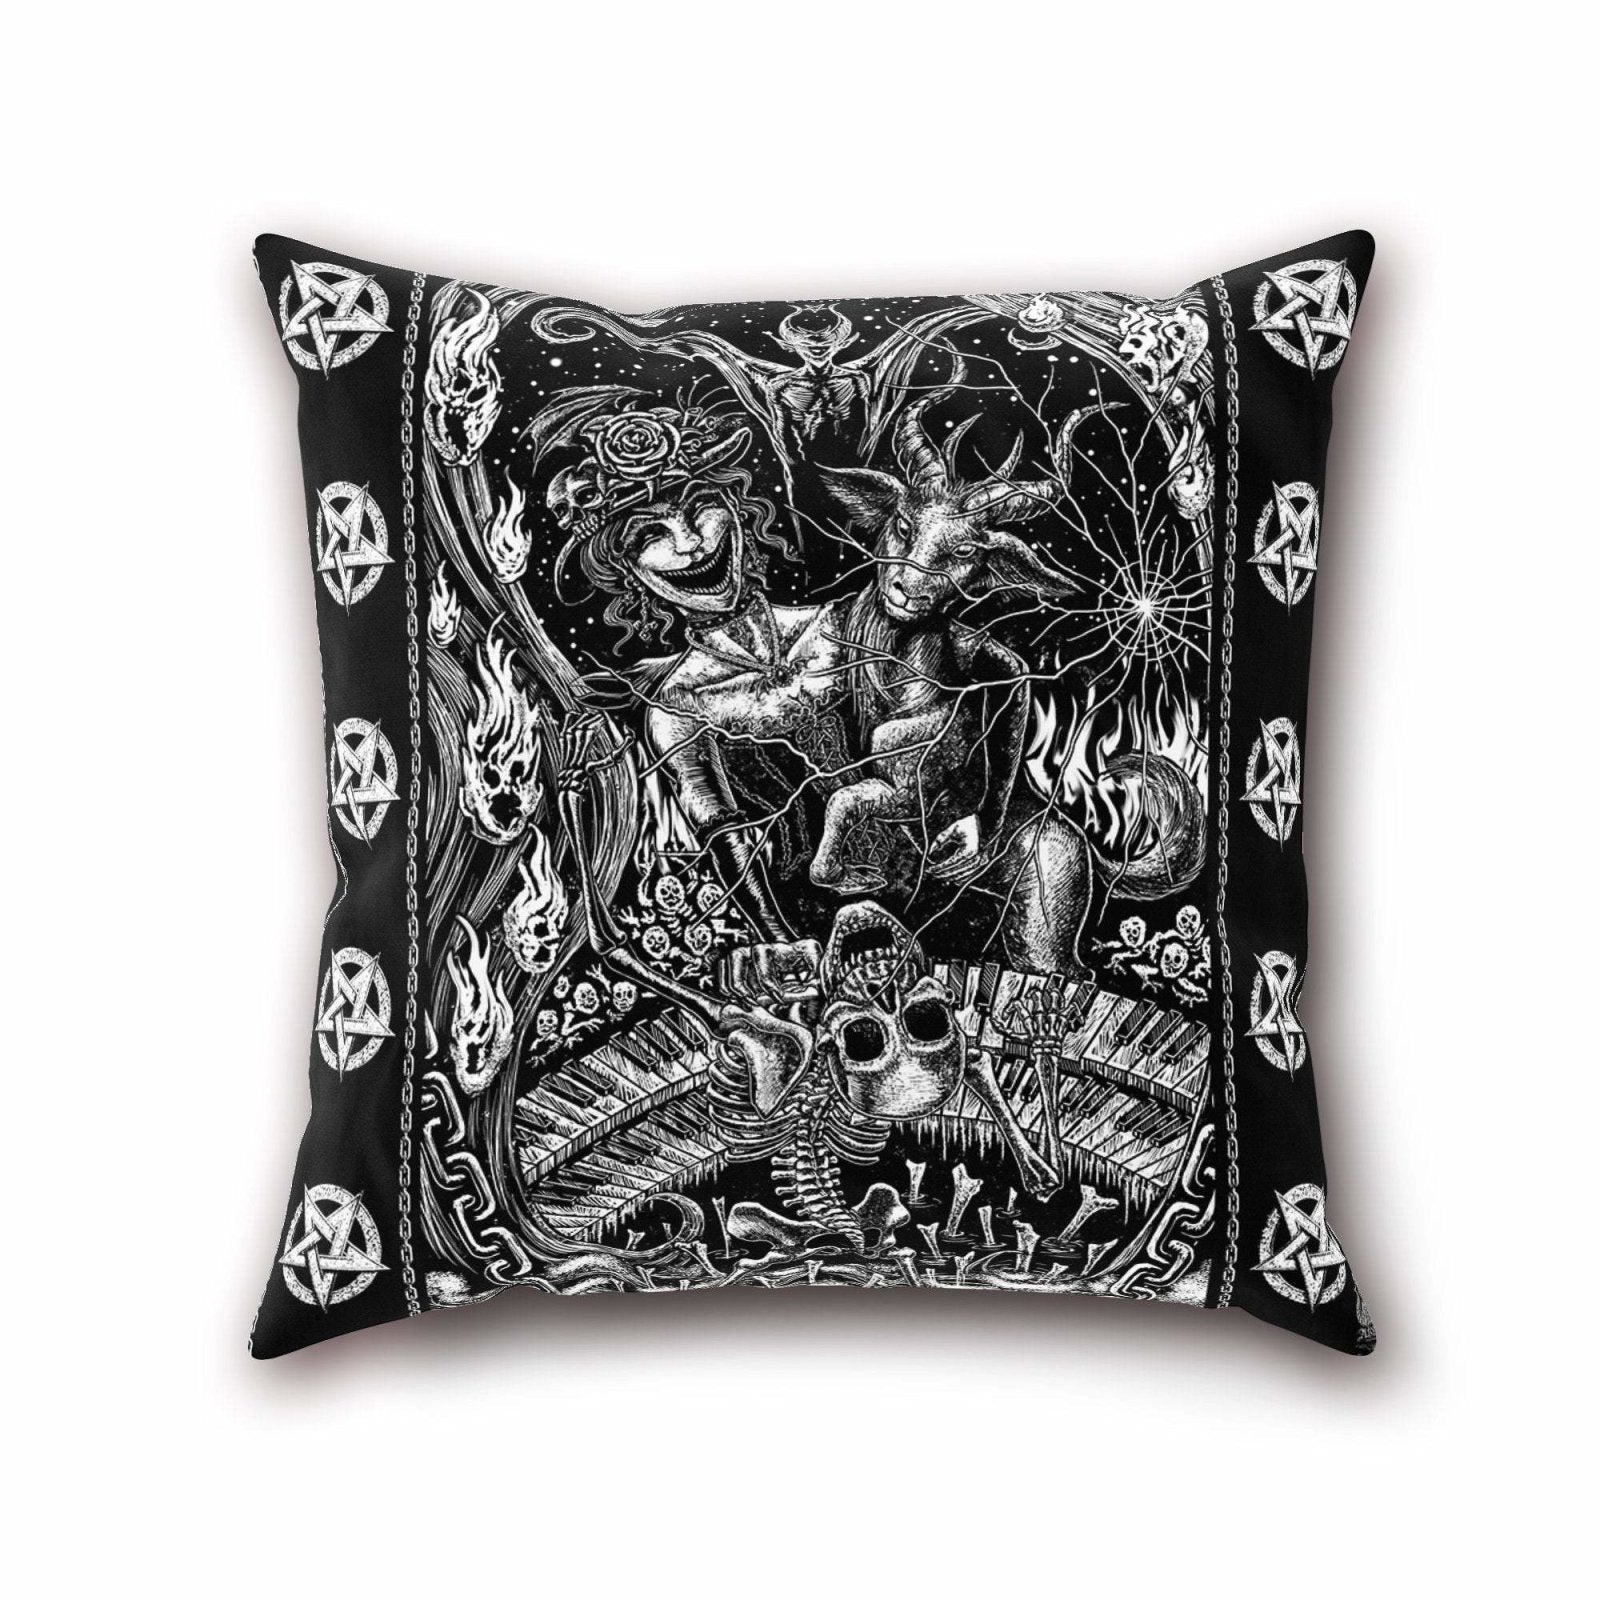 Gothic Throw Pillow, Decorative Accent Cushion, Satanic Room Decor, Dark Art, Alternative Home - Goth Hell with Pentagrams, Merry - Abysm Internal